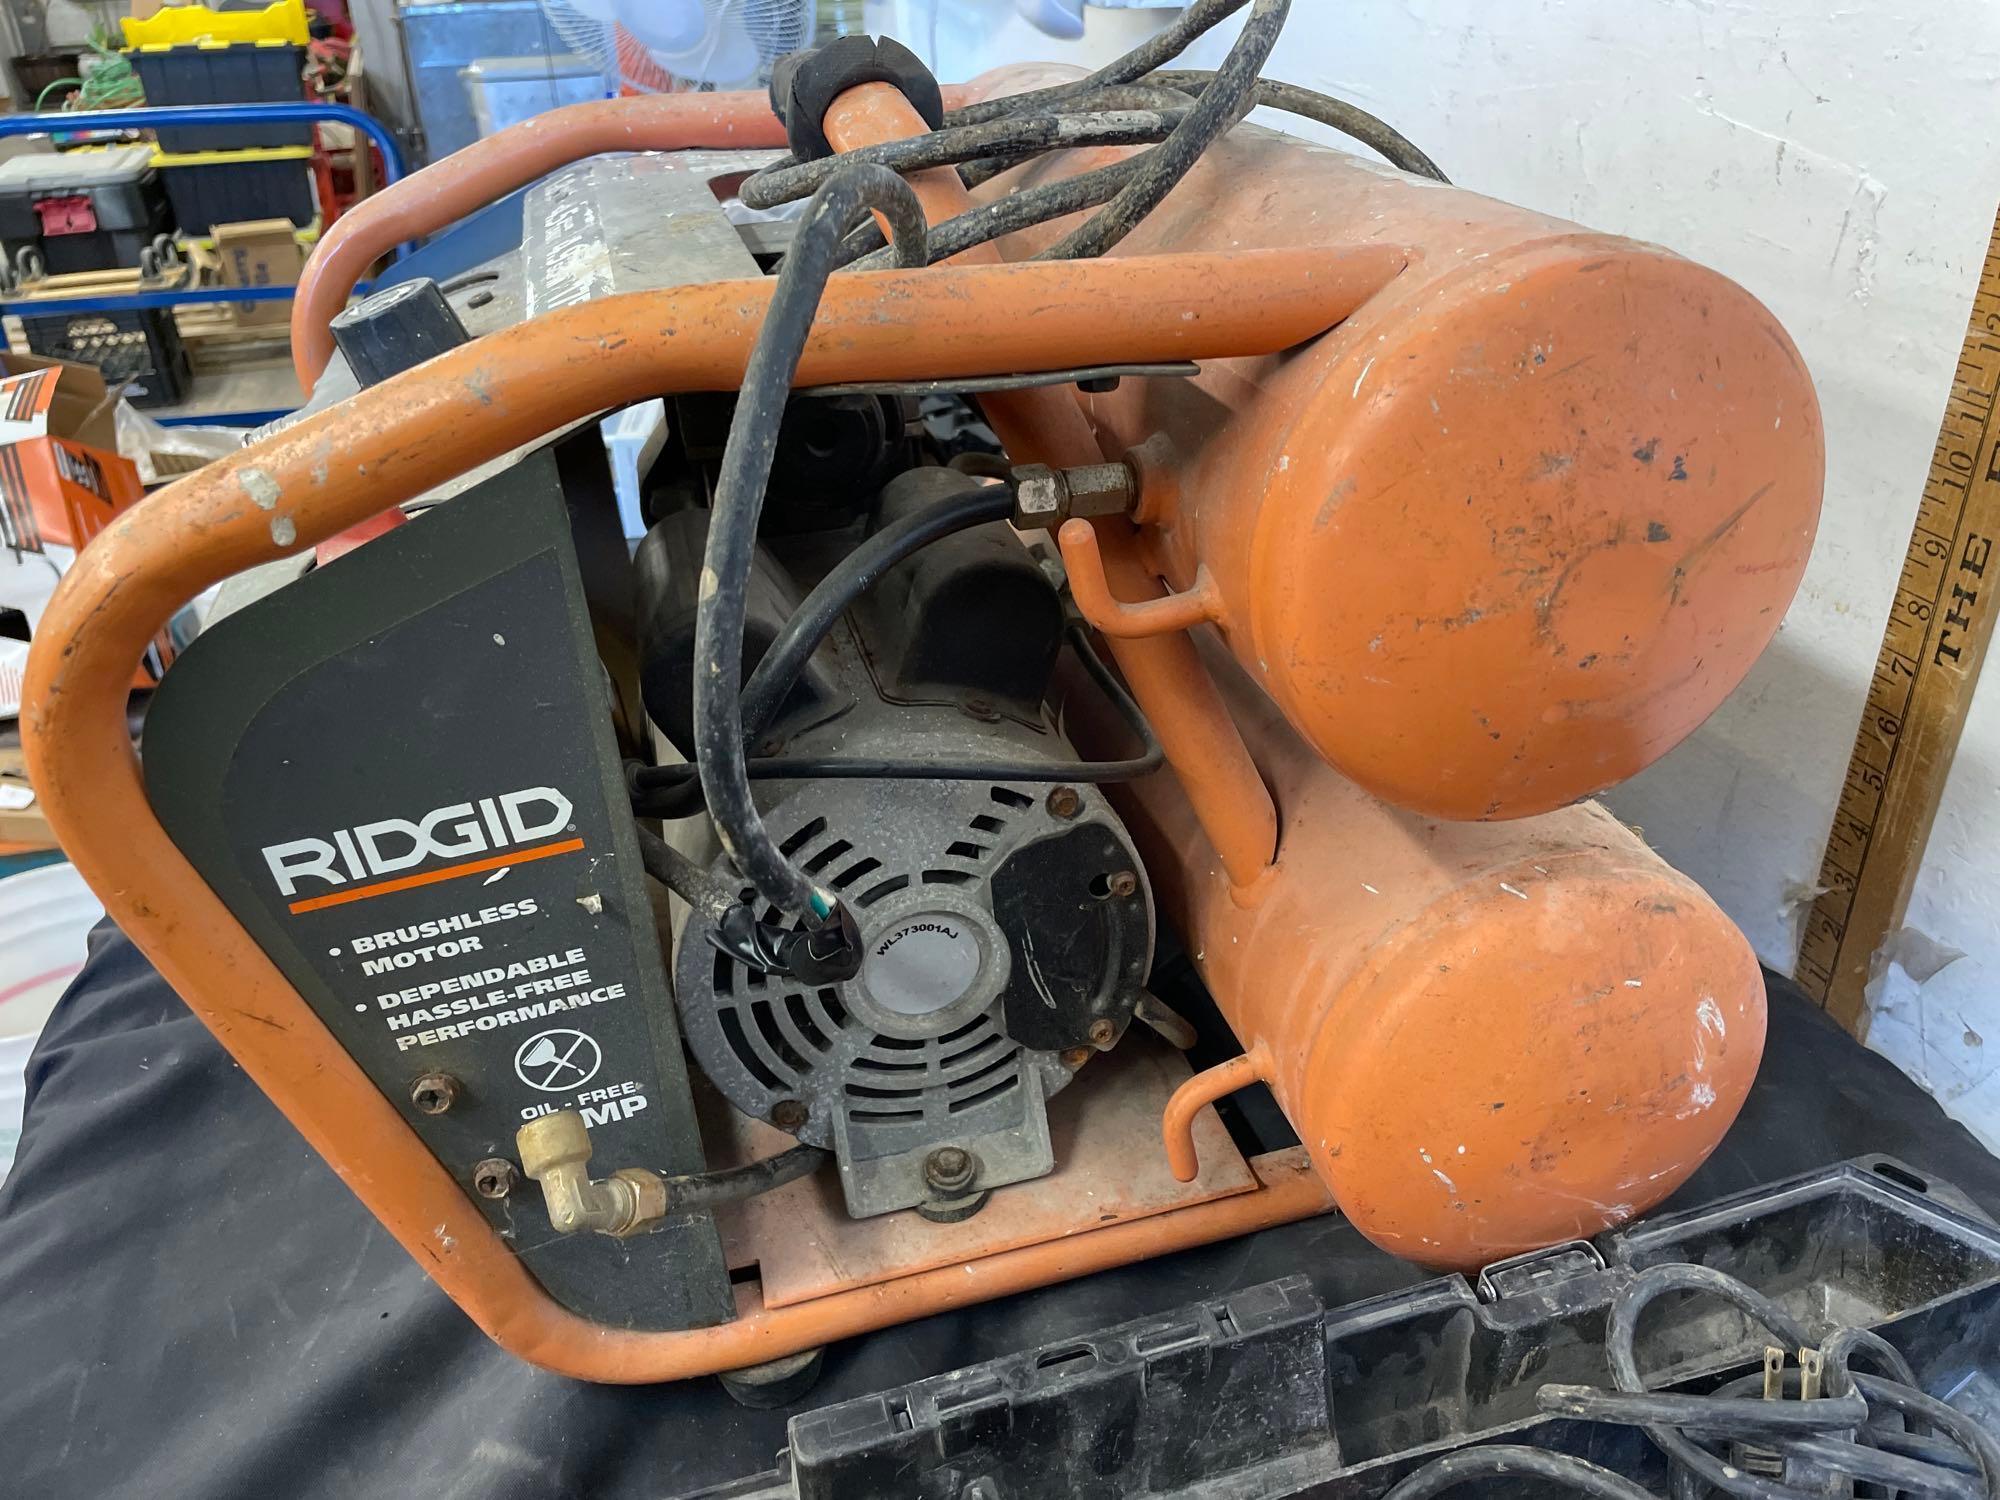 Ridgid Brushless motor and reciprocating saw